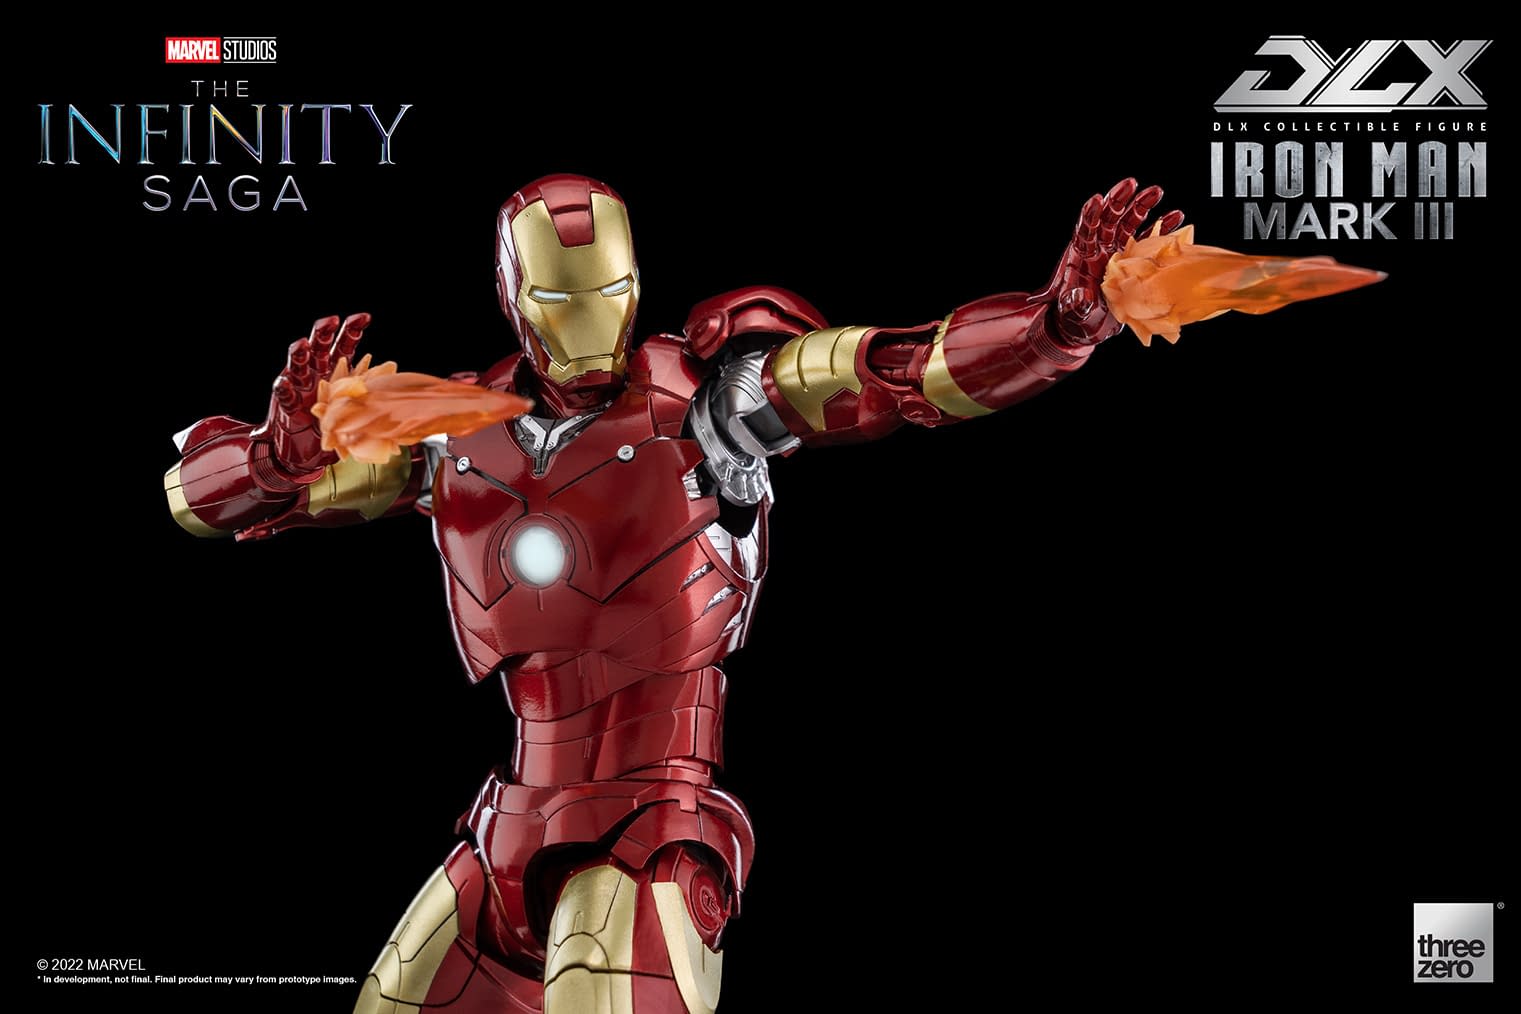 Iron Man Lands with New Infinity Saga DLX Mark 3 Figure from threezero